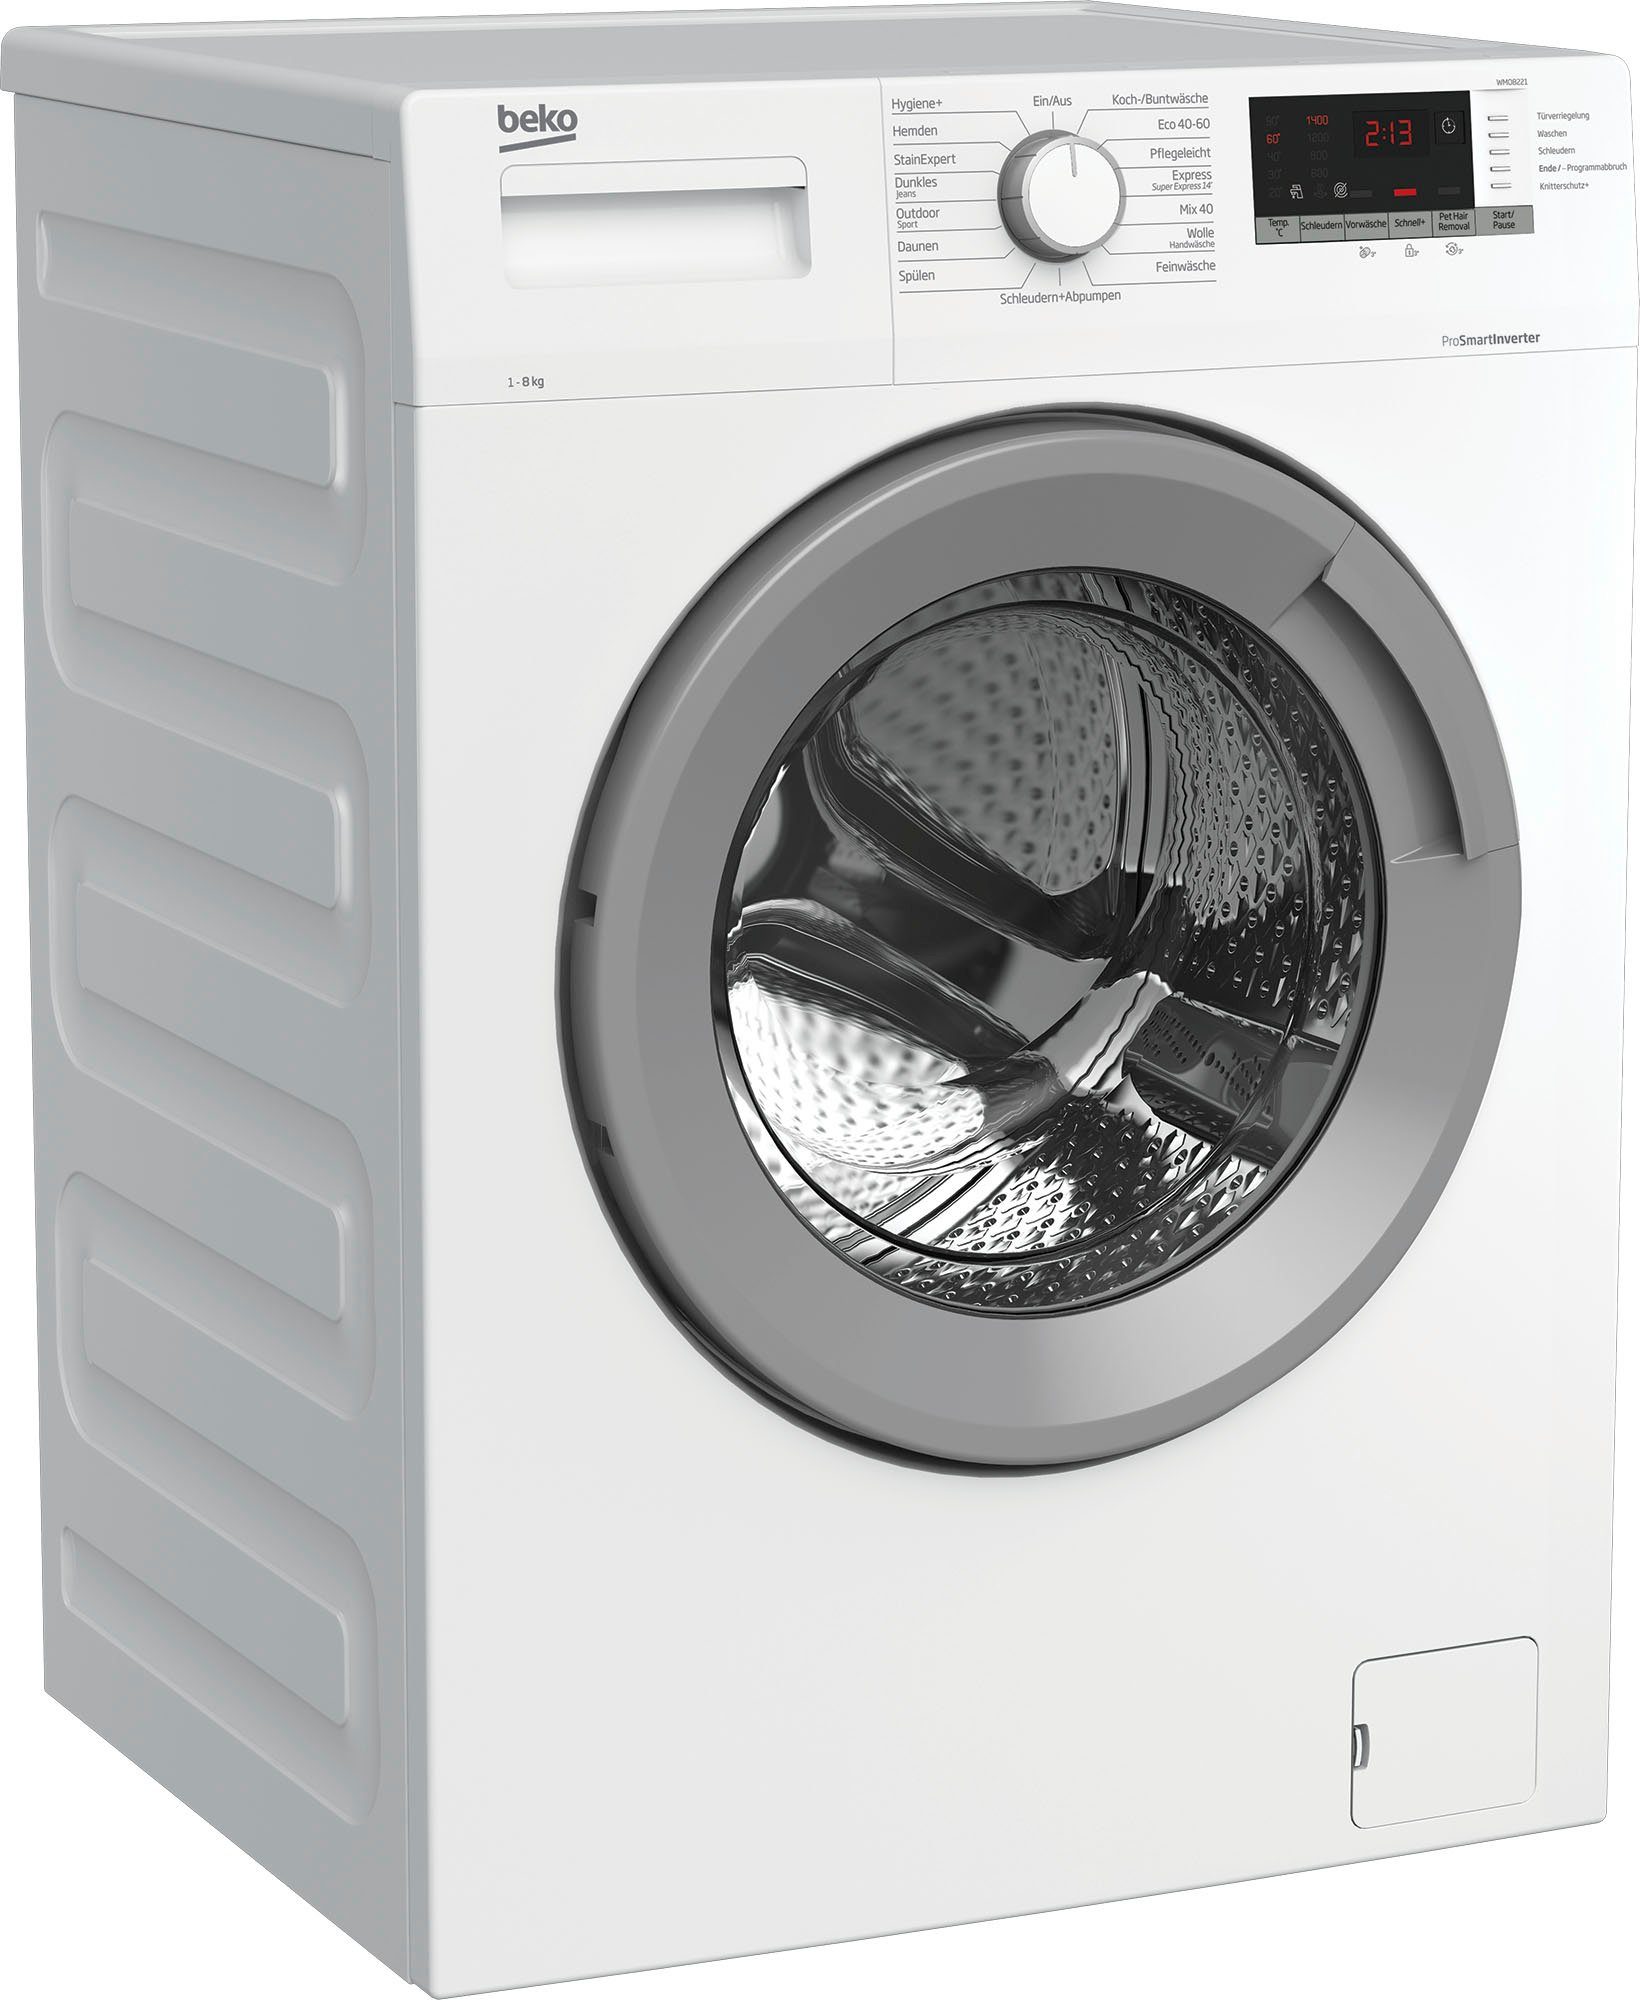 BEKO Waschmaschine WMO8221, 8 kg, 1400 U/min | OTTO